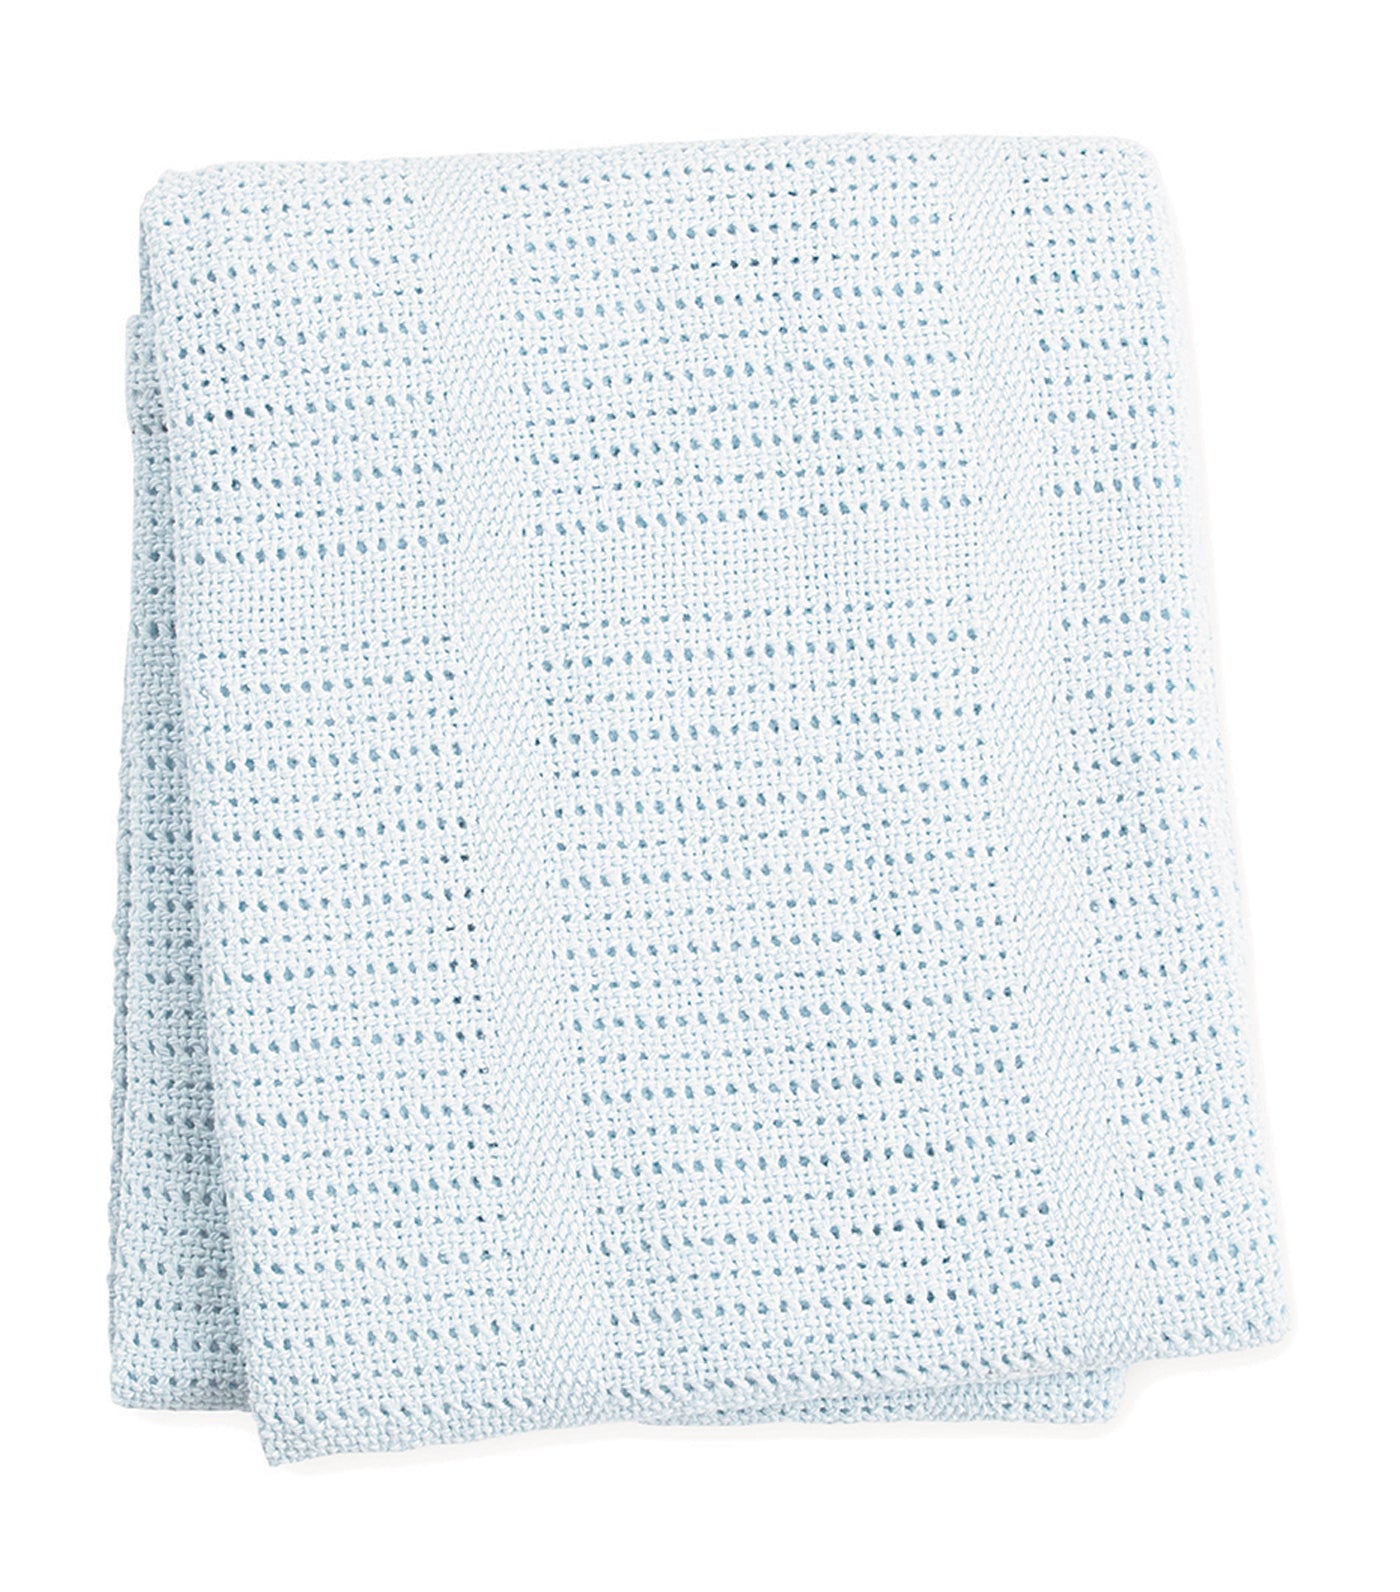 lulujo blue cellular cotton baby blanket